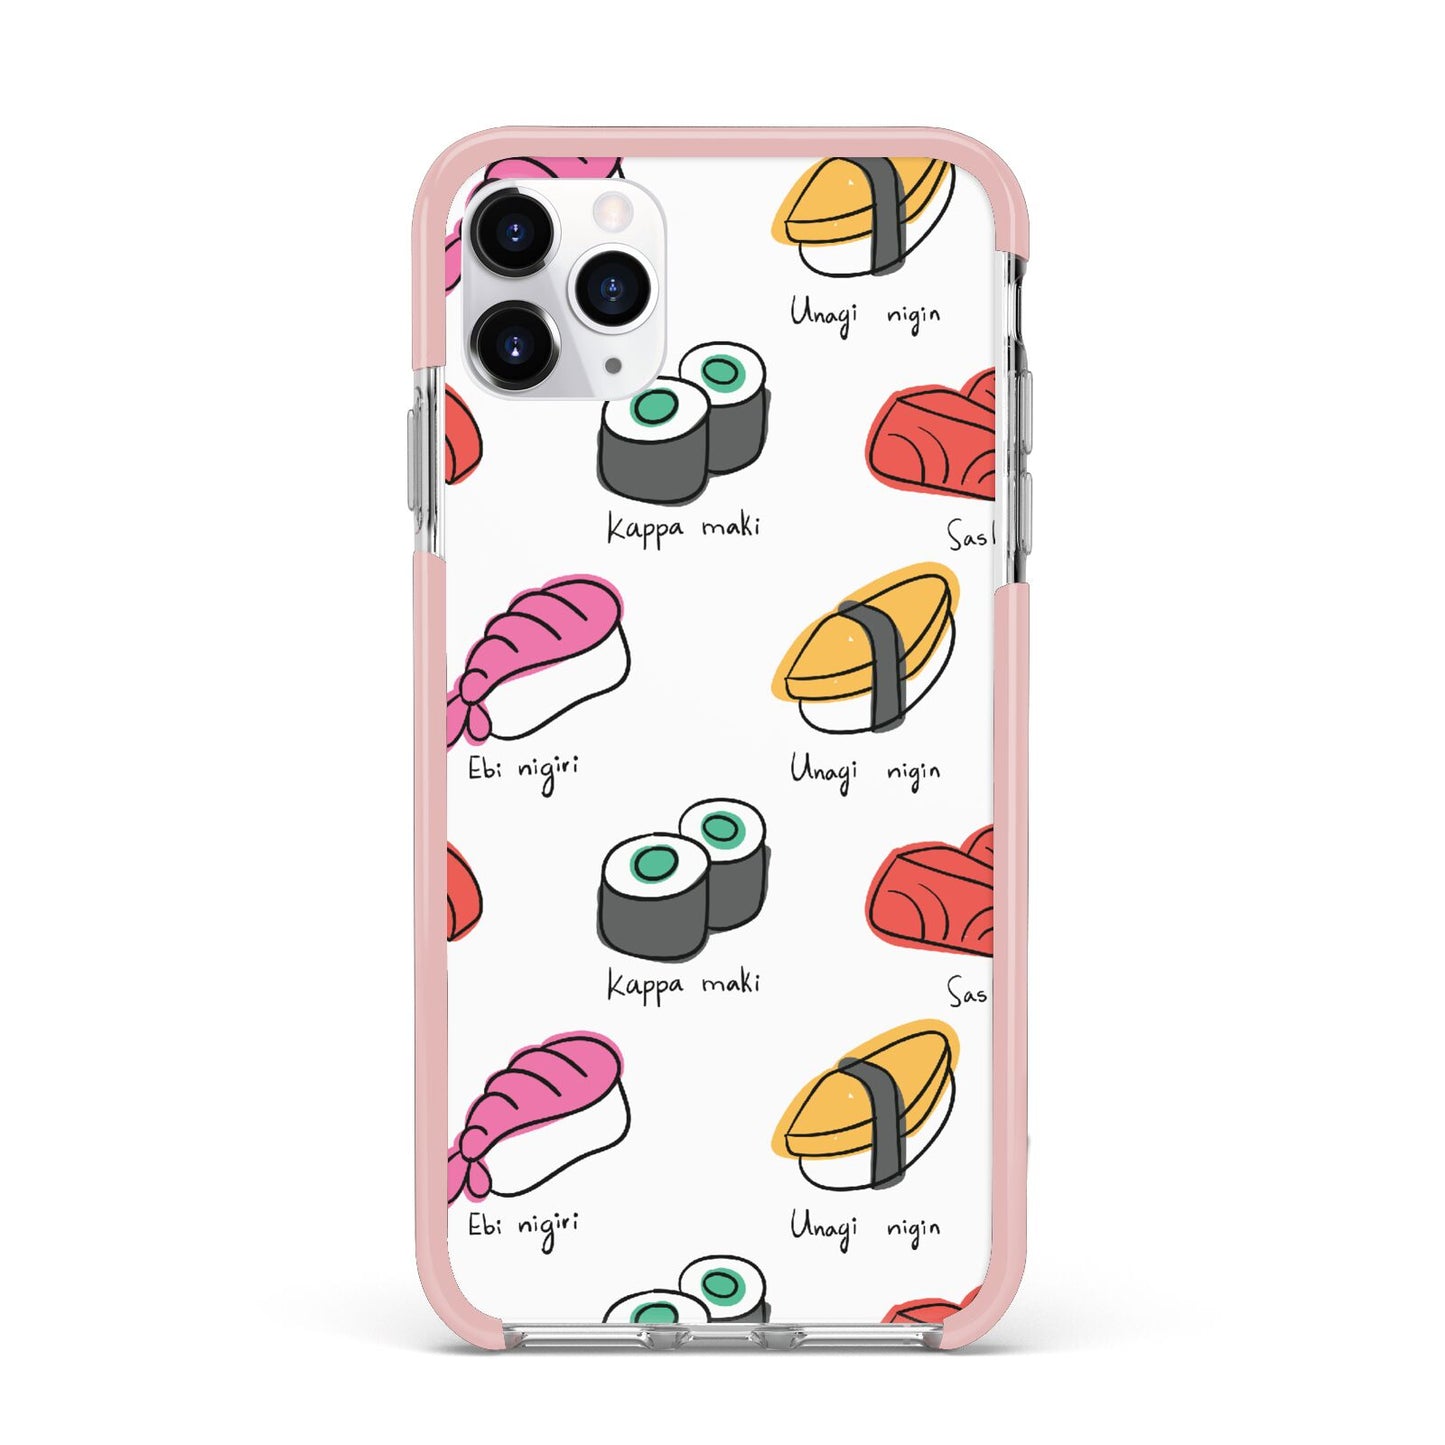 Sashimi Kappa Maki Sushi iPhone 11 Pro Max Impact Pink Edge Case